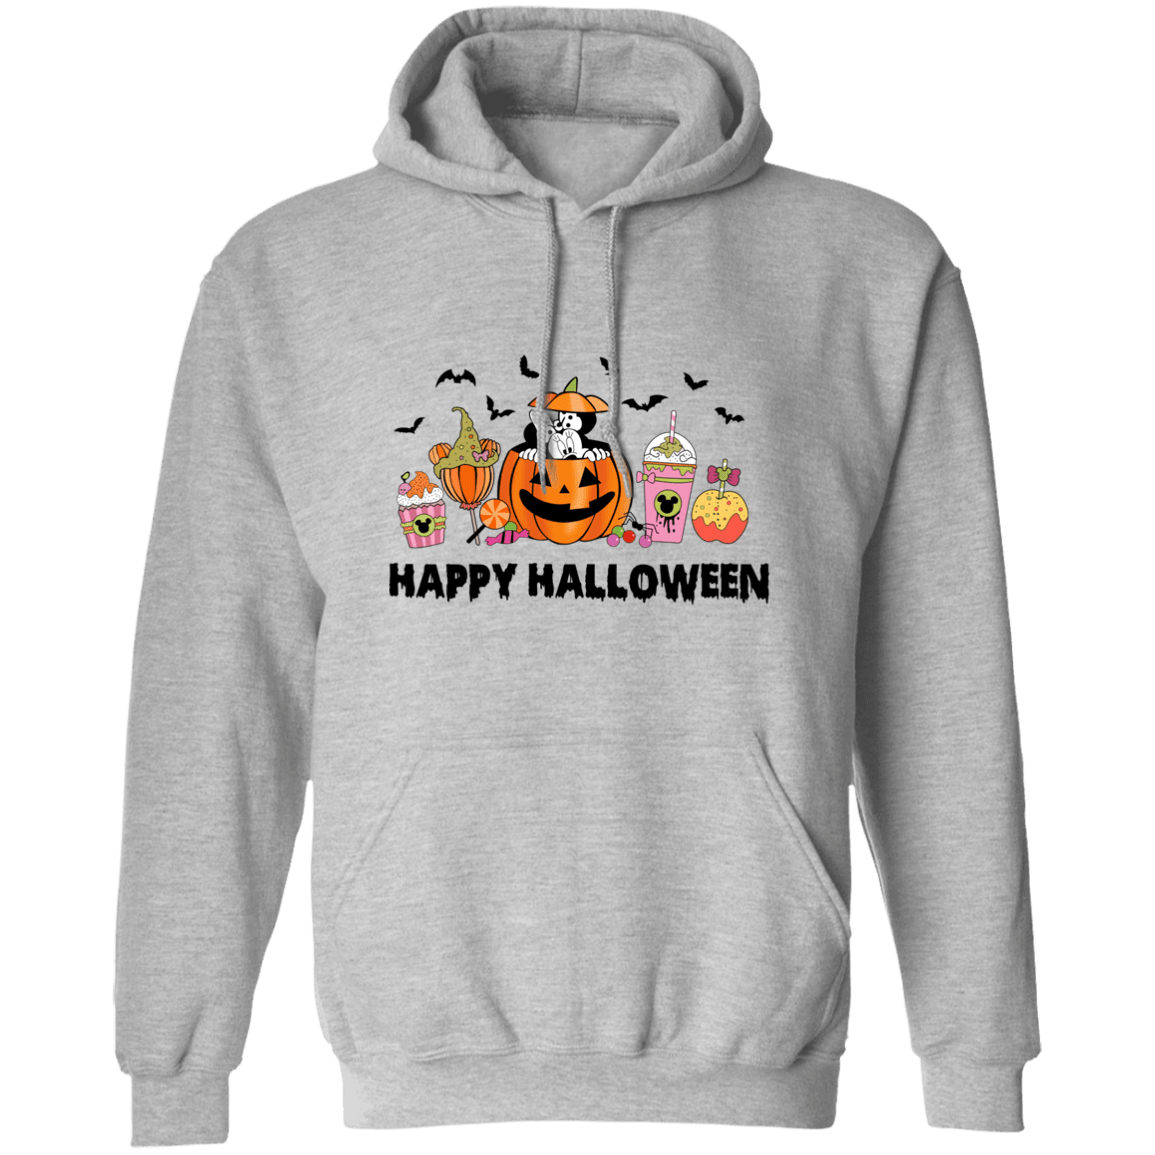 Happy Halloween Hoodie